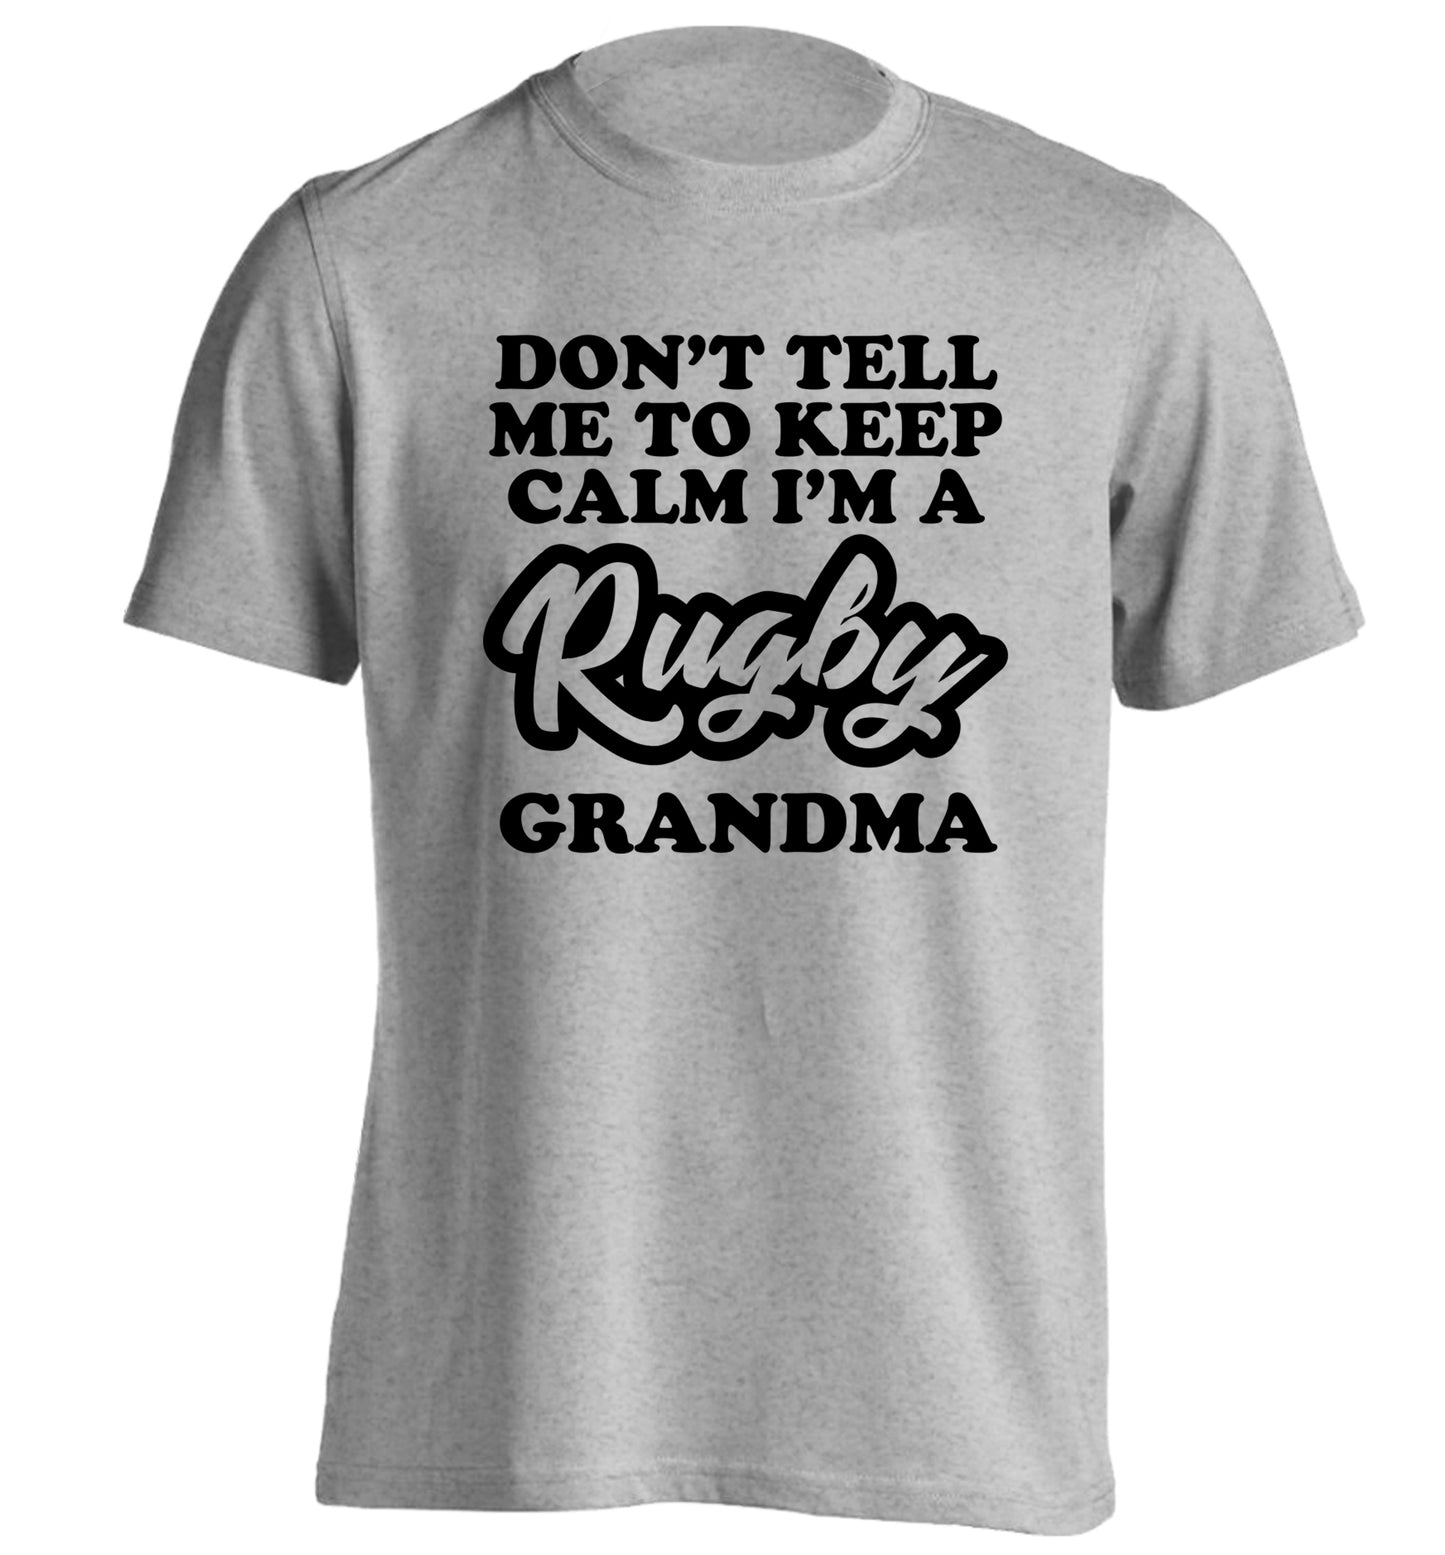 Don't tell me to keep calm I'm a rugby grandma adults unisex grey Tshirt 2XL